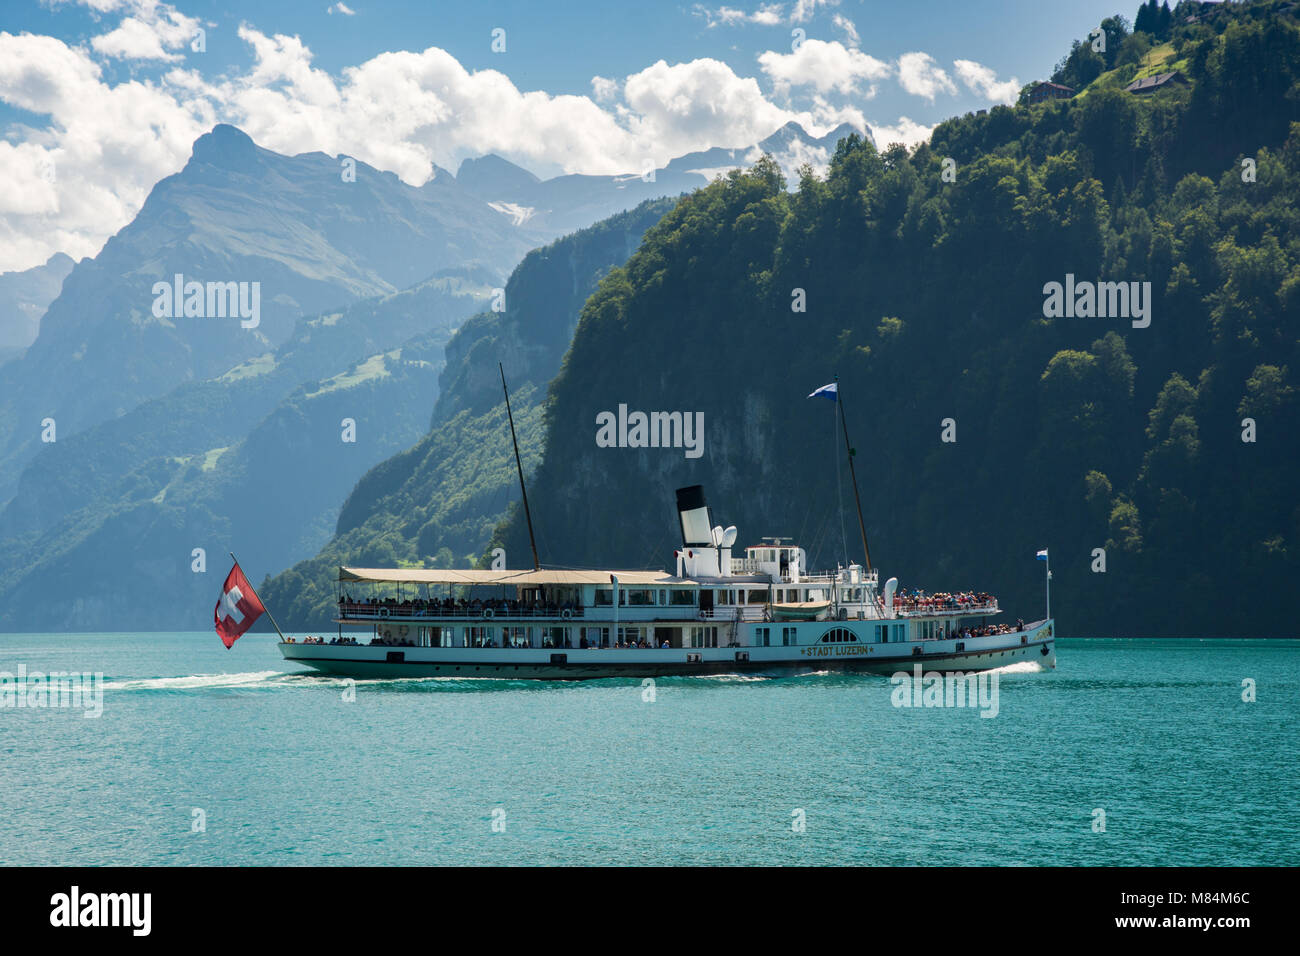 BRUNNEN, SWITZERLAND - AUGUST 2017 - Ship full of tourists on Lake Lucerne near Brunnen in Switzerland Stock Photo